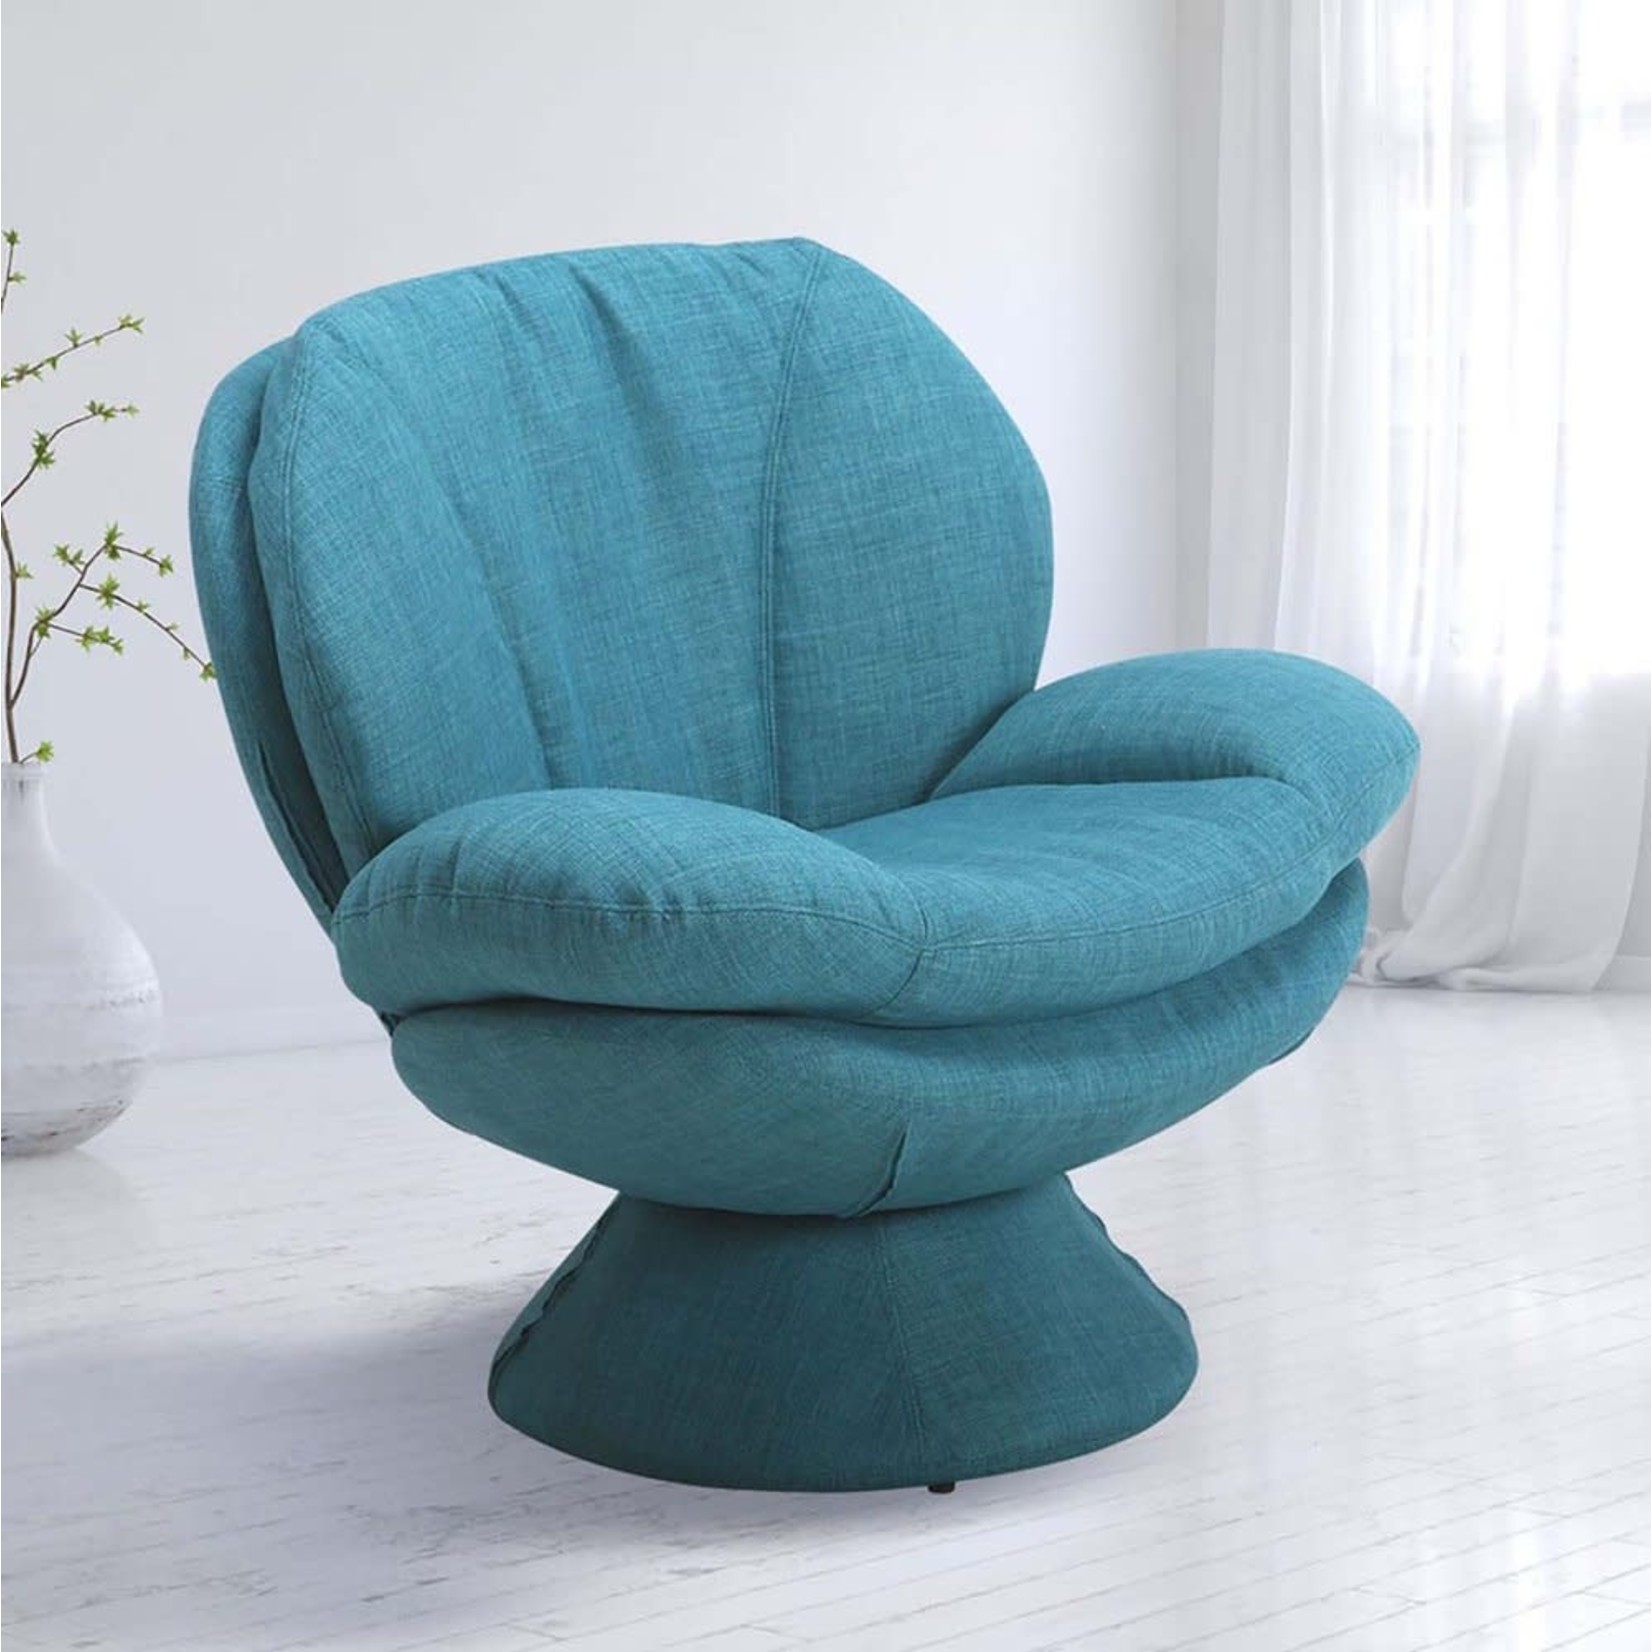 PROGRESSIVE Leisure Accent Chair Turquoise